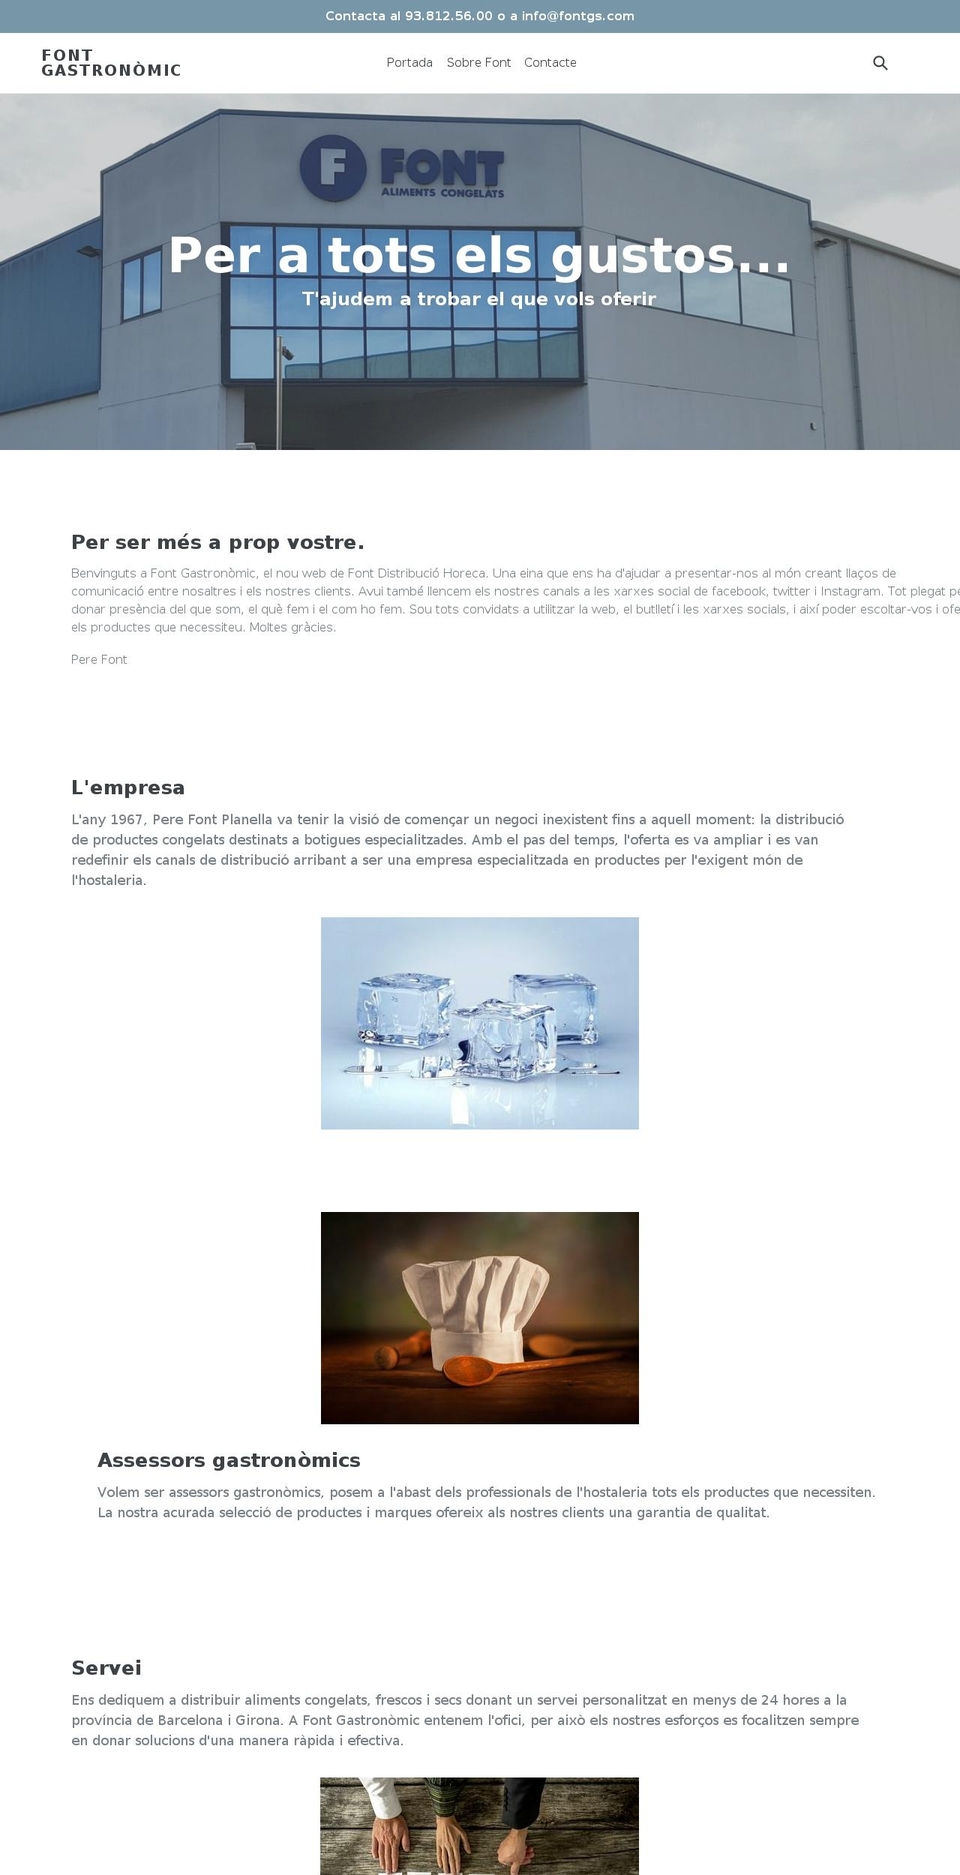 fontgs.es shopify website screenshot